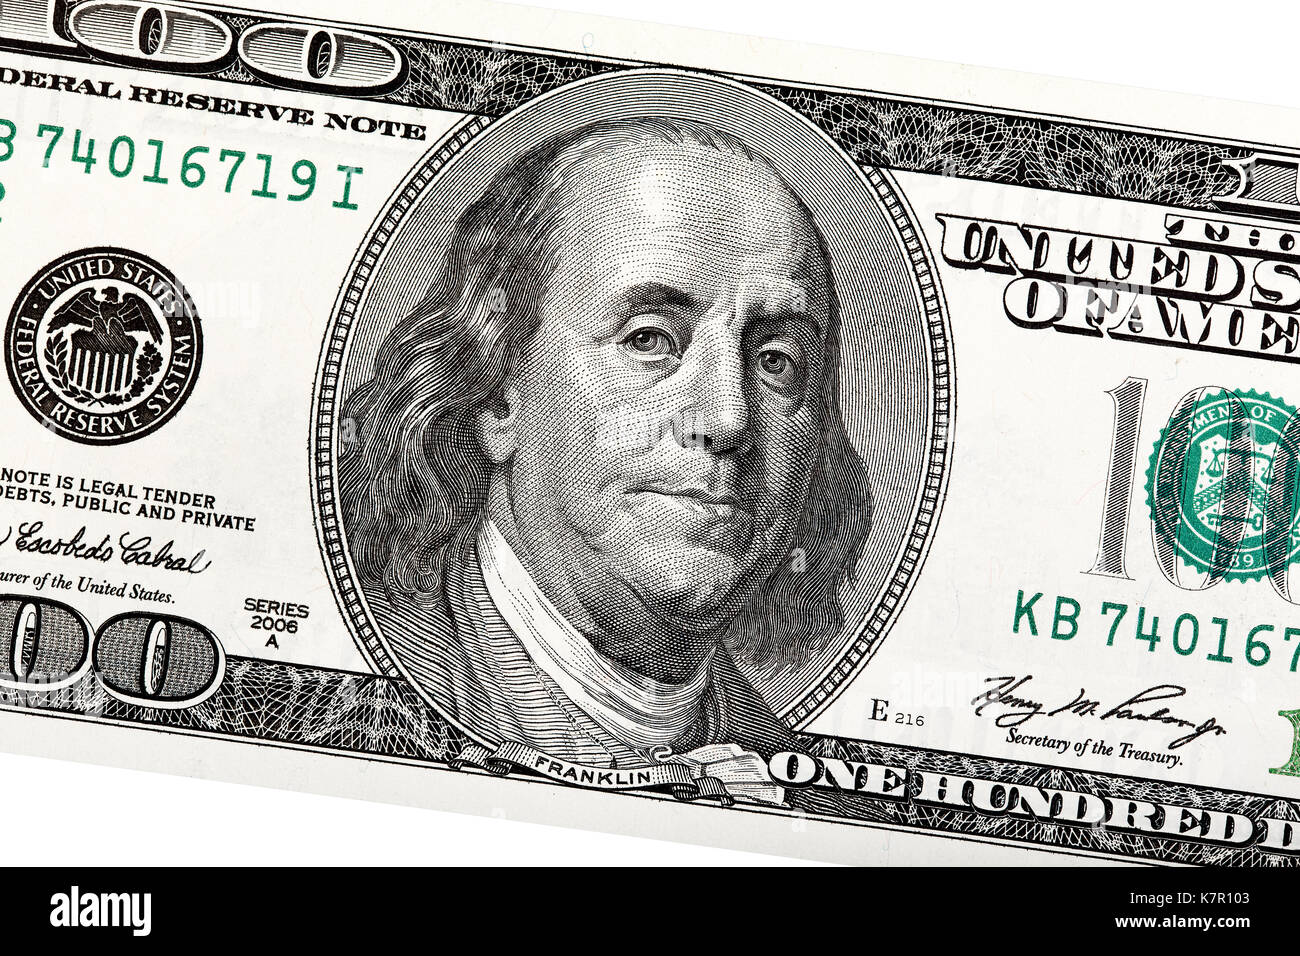 Why is Benjamin Franklin on the $100 bill? – Benjamin Franklin